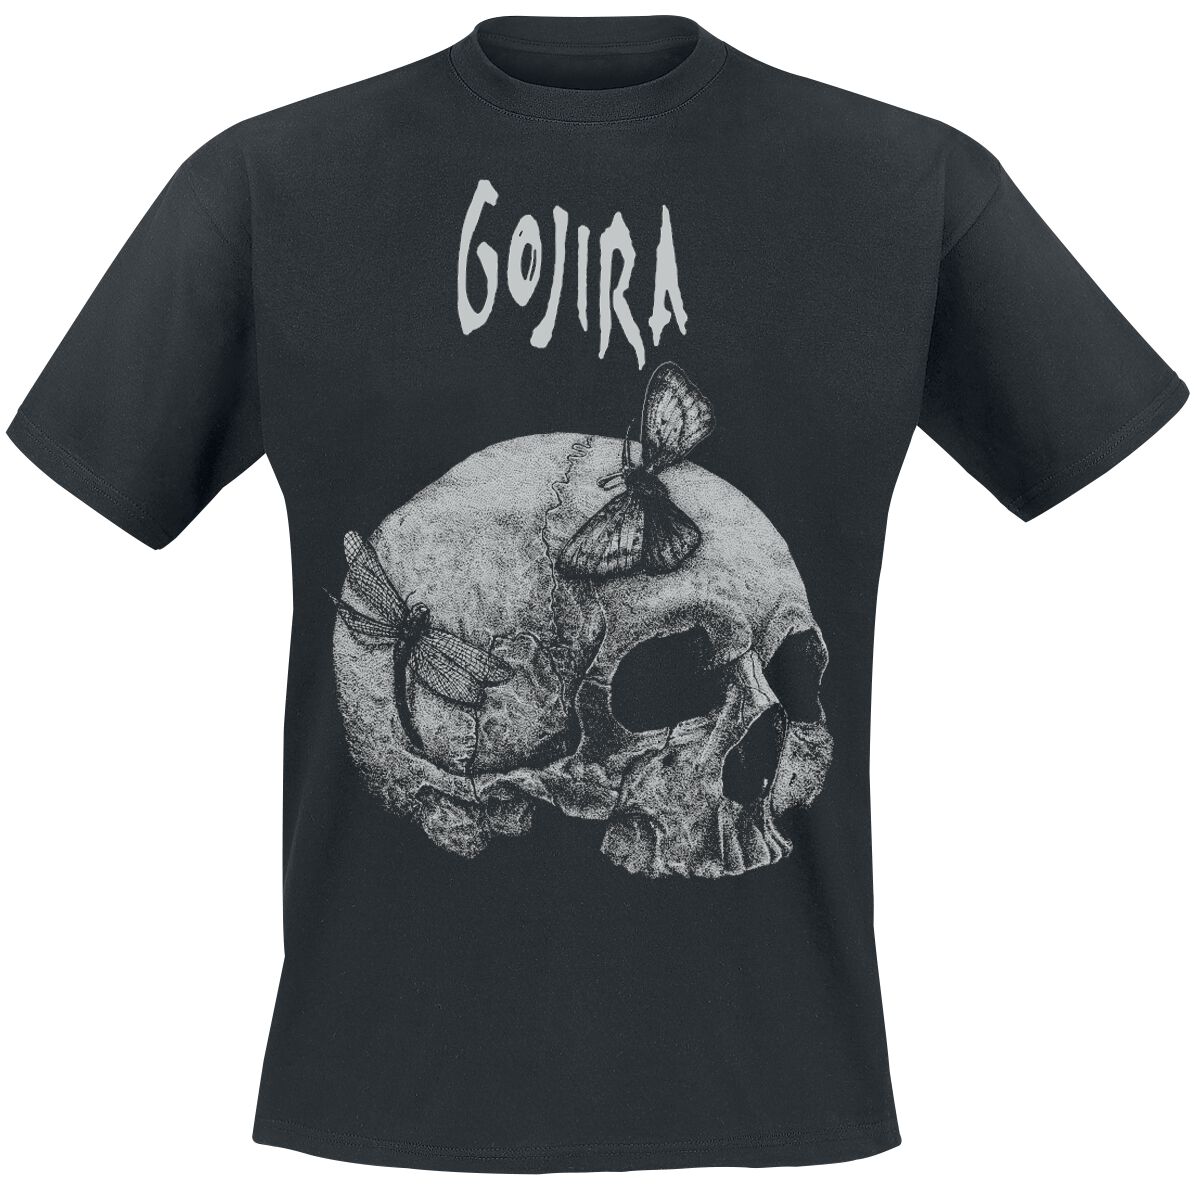 Gojira Moth Skull T-Shirt schwarz in XXL